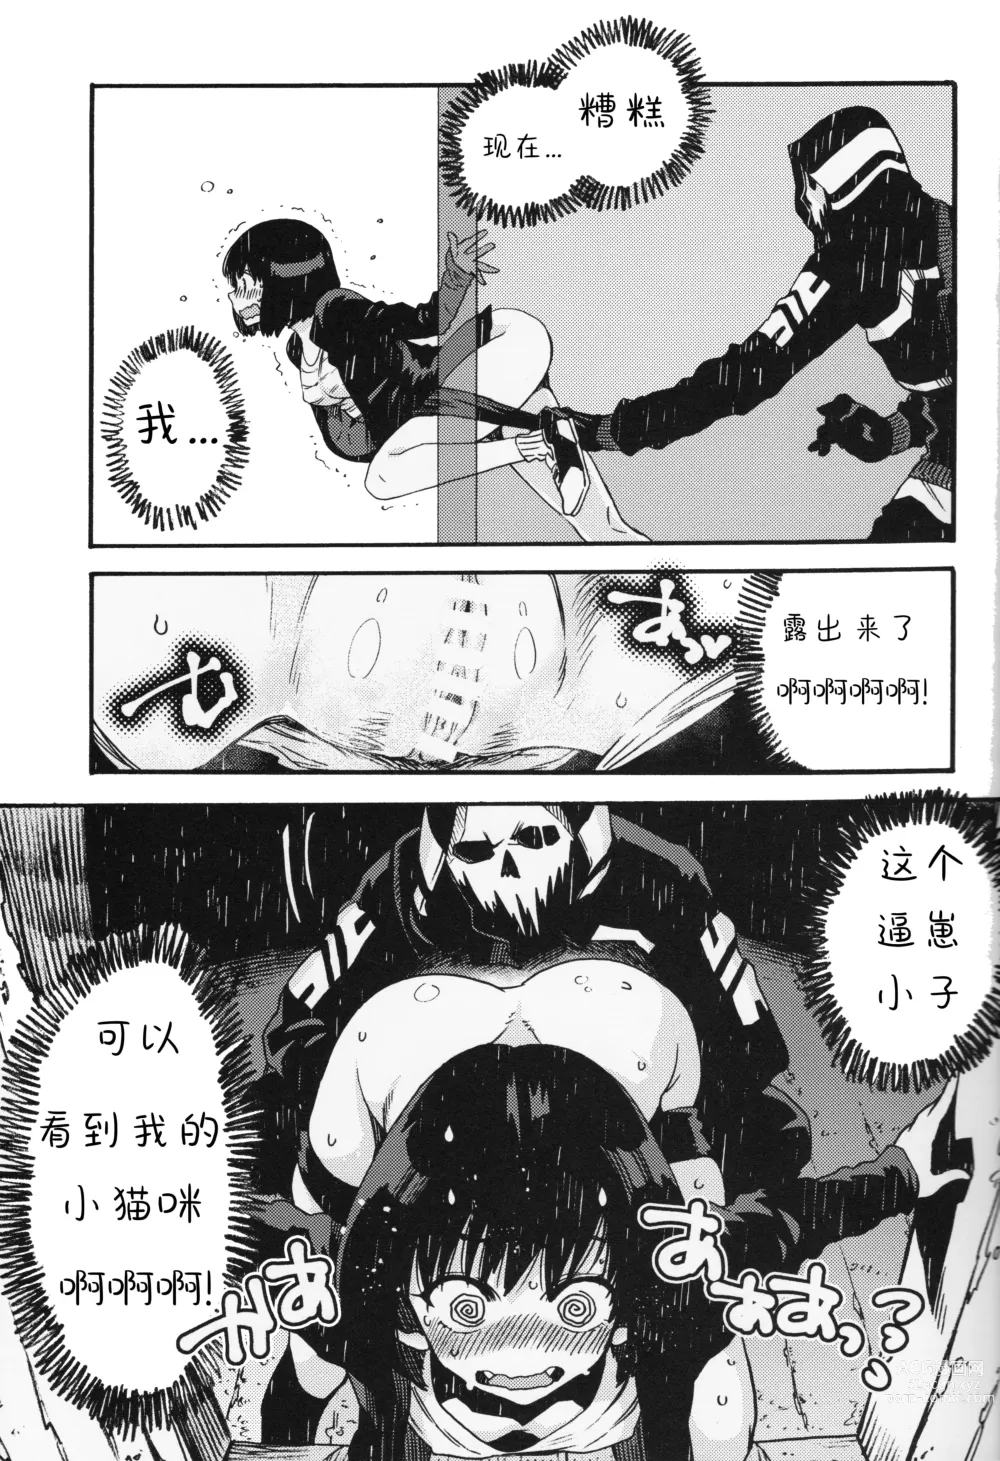 Page 8 of doujinshi Joe-kun to Min-chan no Hon